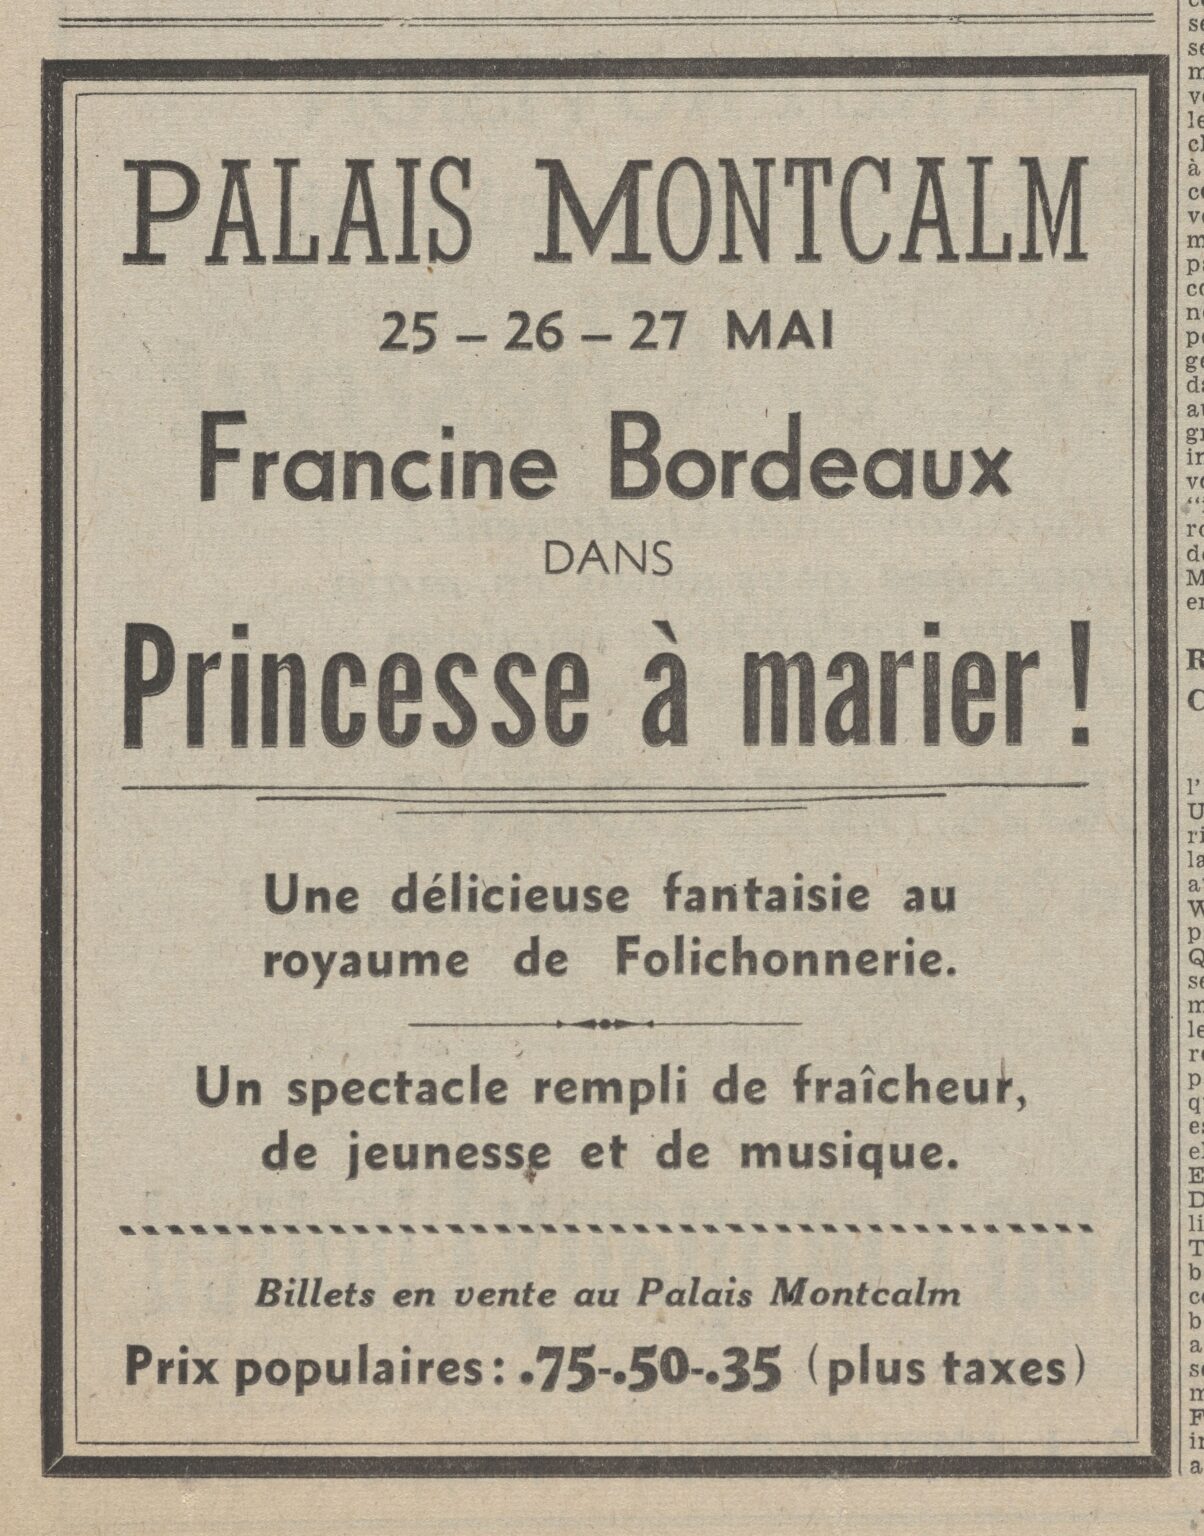 Le Soleil, 23 mai 1942, p. 12.